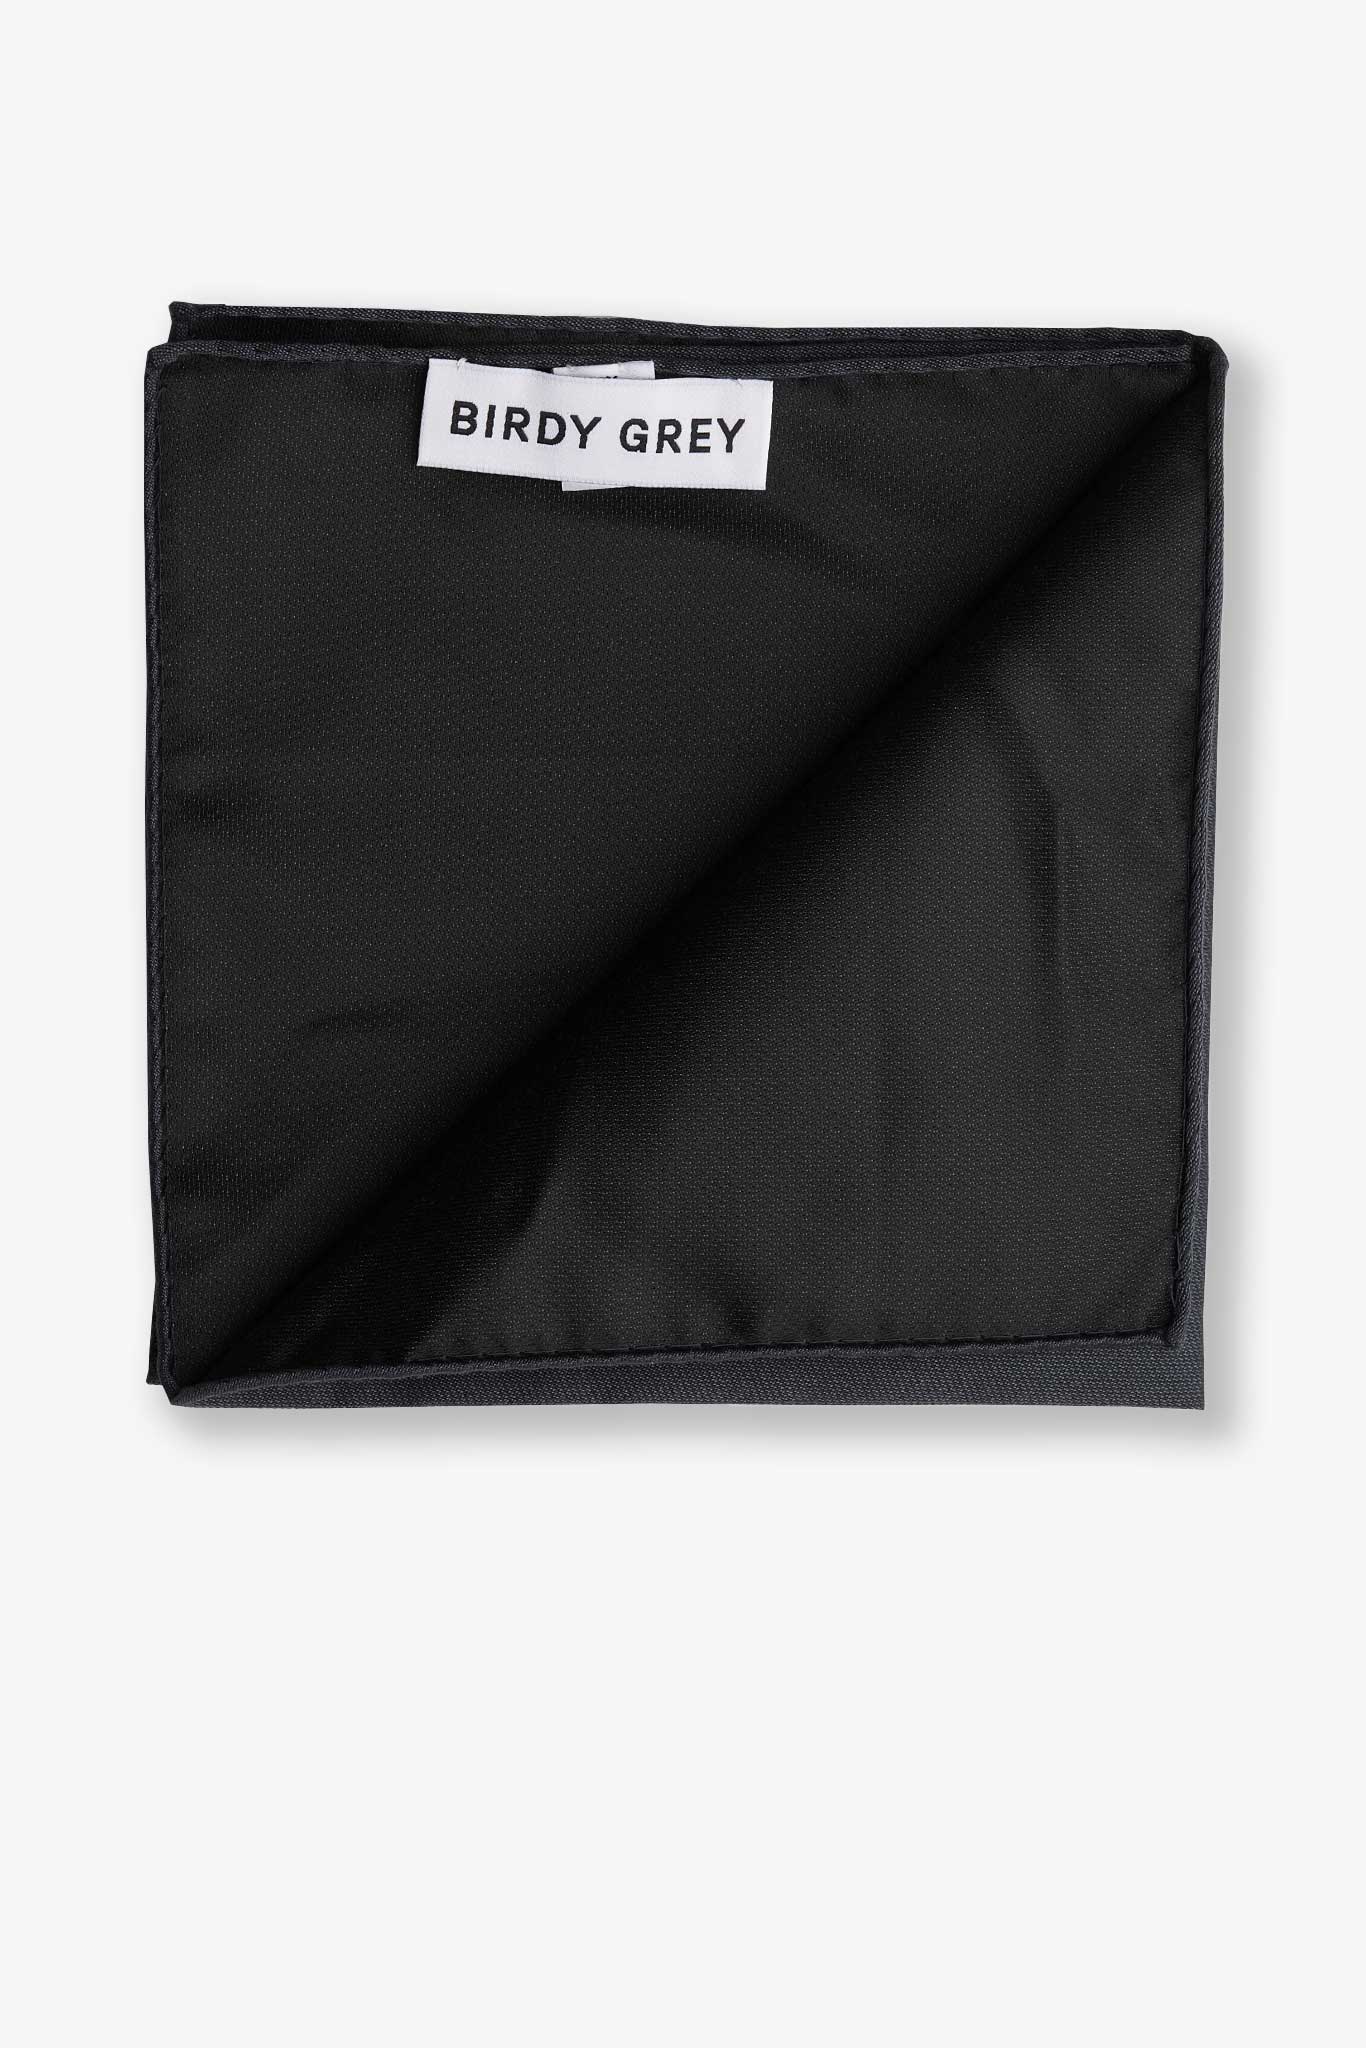 Didi Black Pocket Square By Birdy Grey